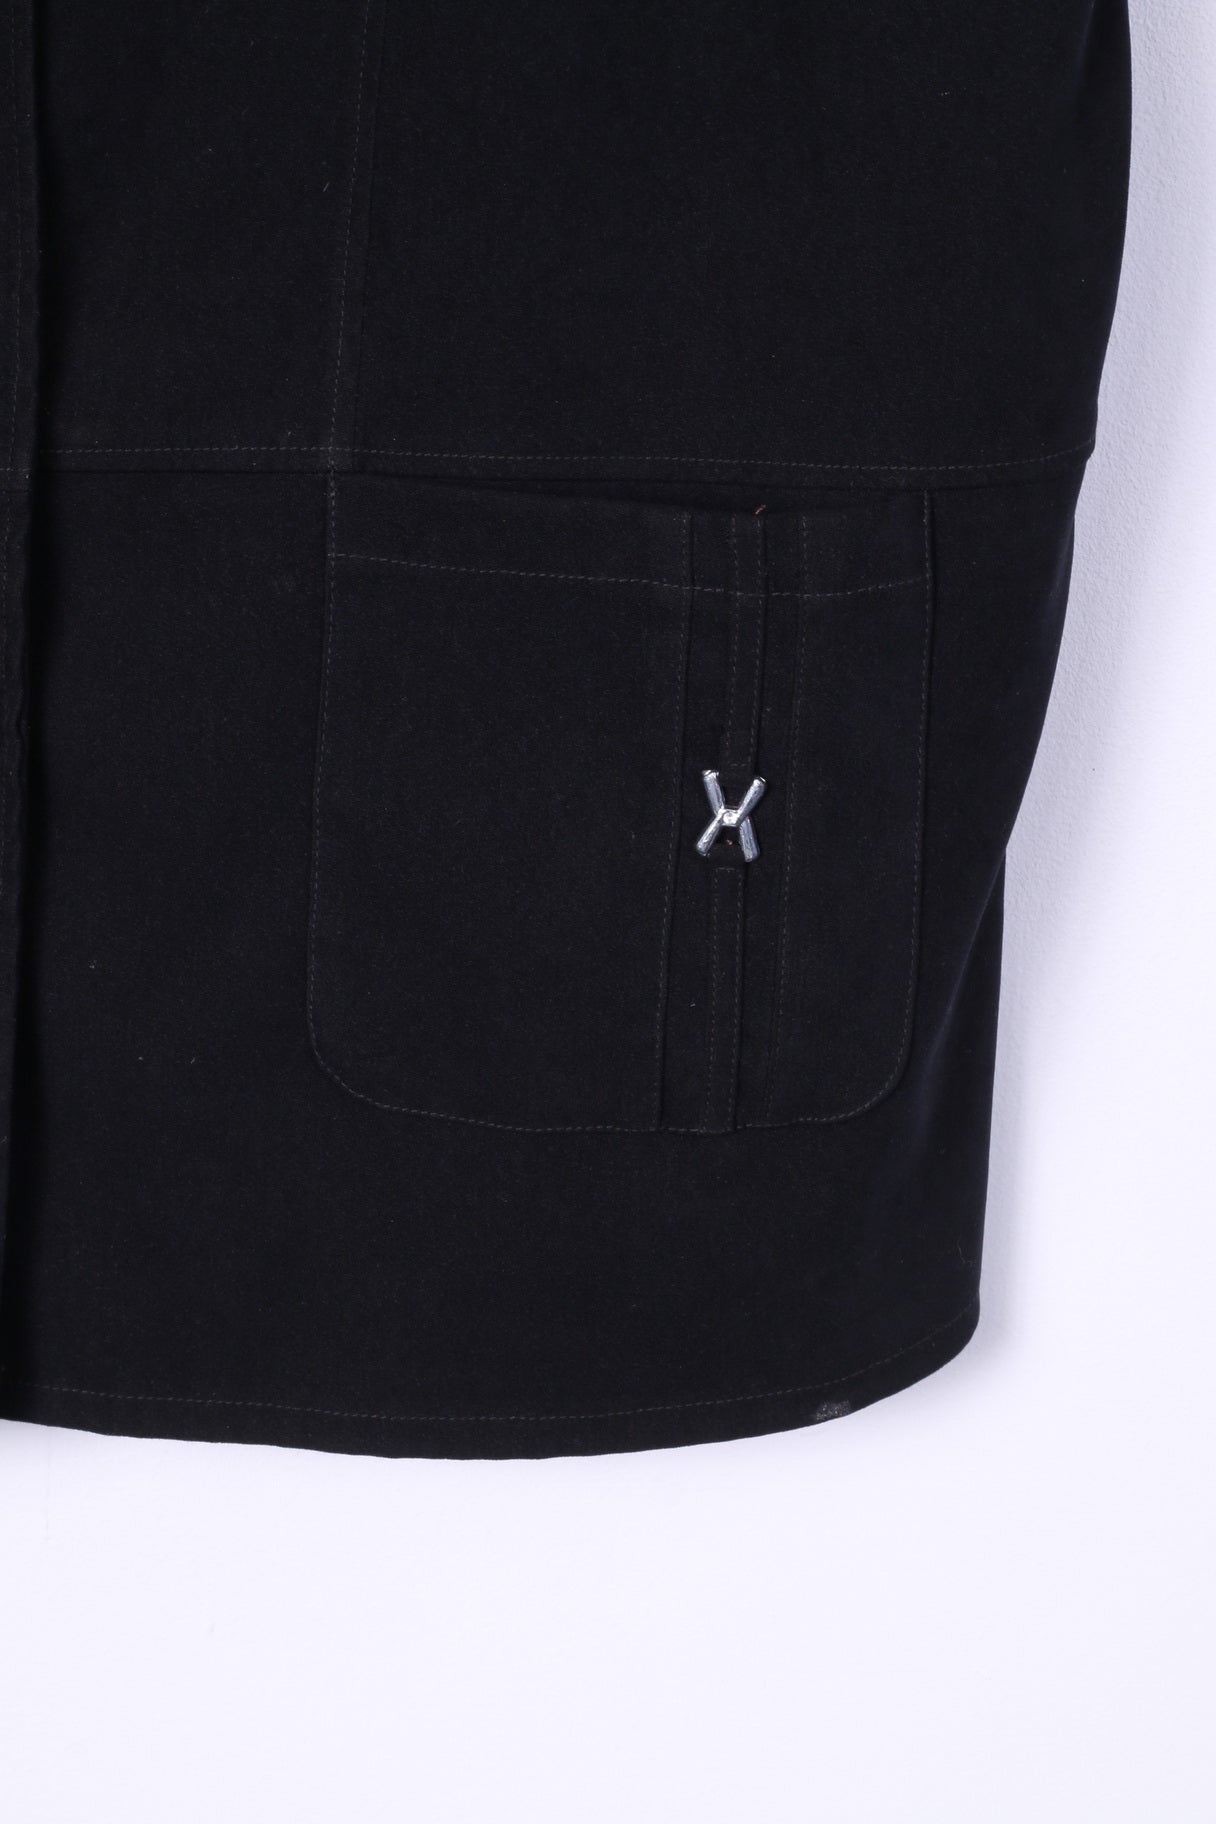 Karoline International Women XL Waistcoat Black Retro Single Breasted Pocket Vest